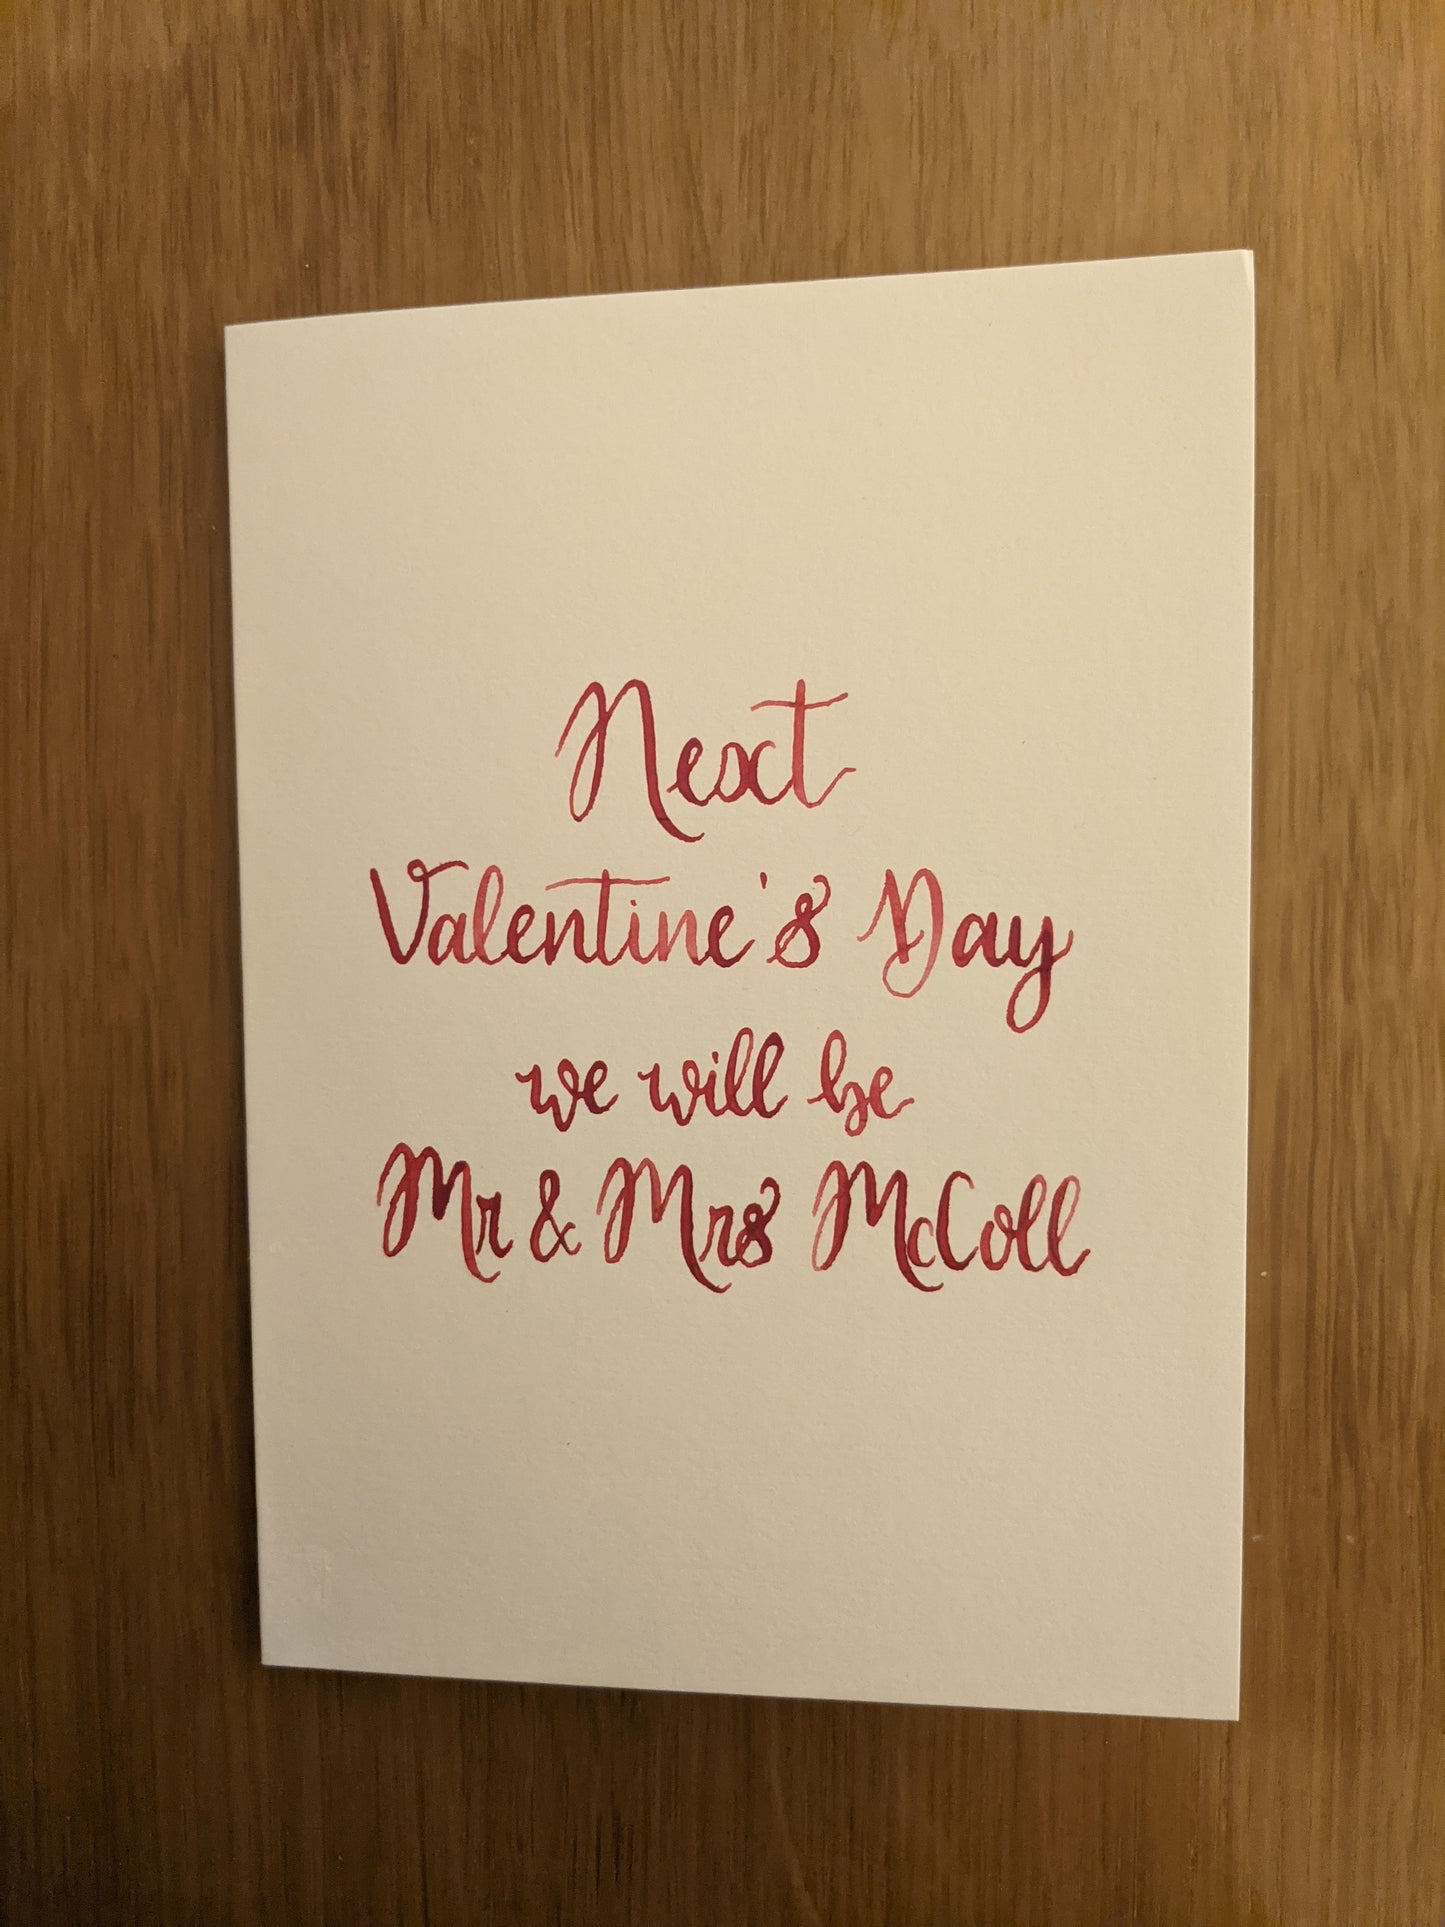 Valentines' cards